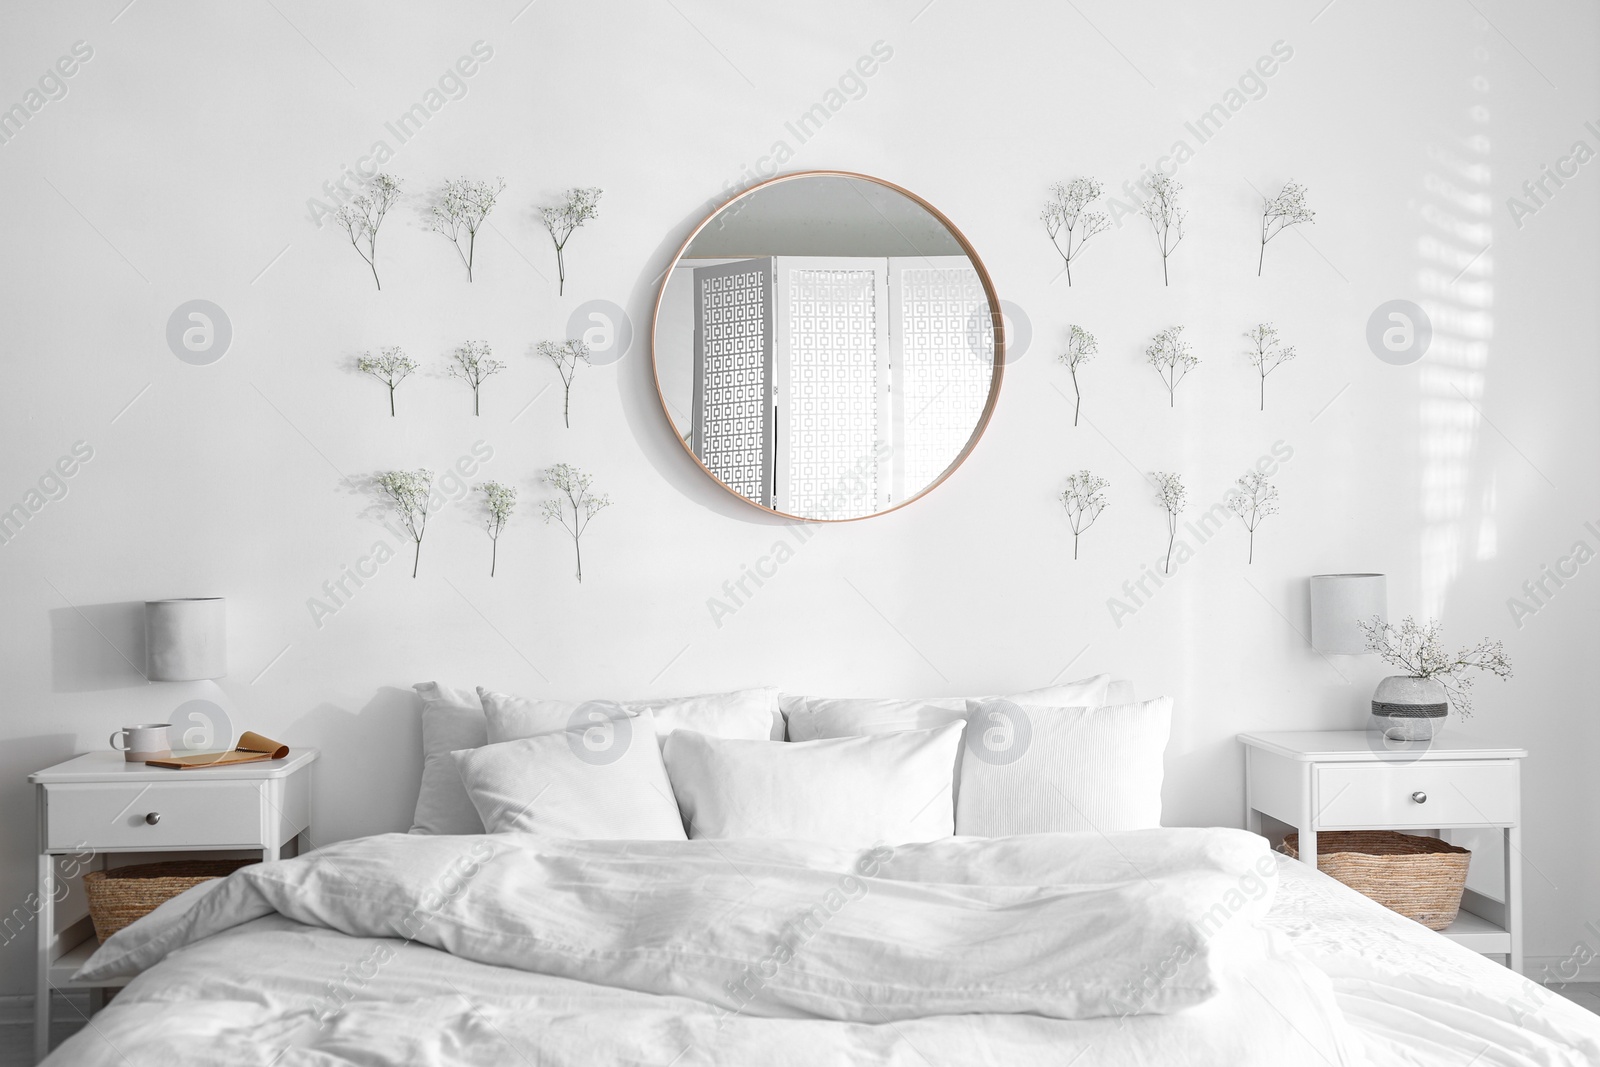 Photo of Modern bedroom interior with stylish round mirror